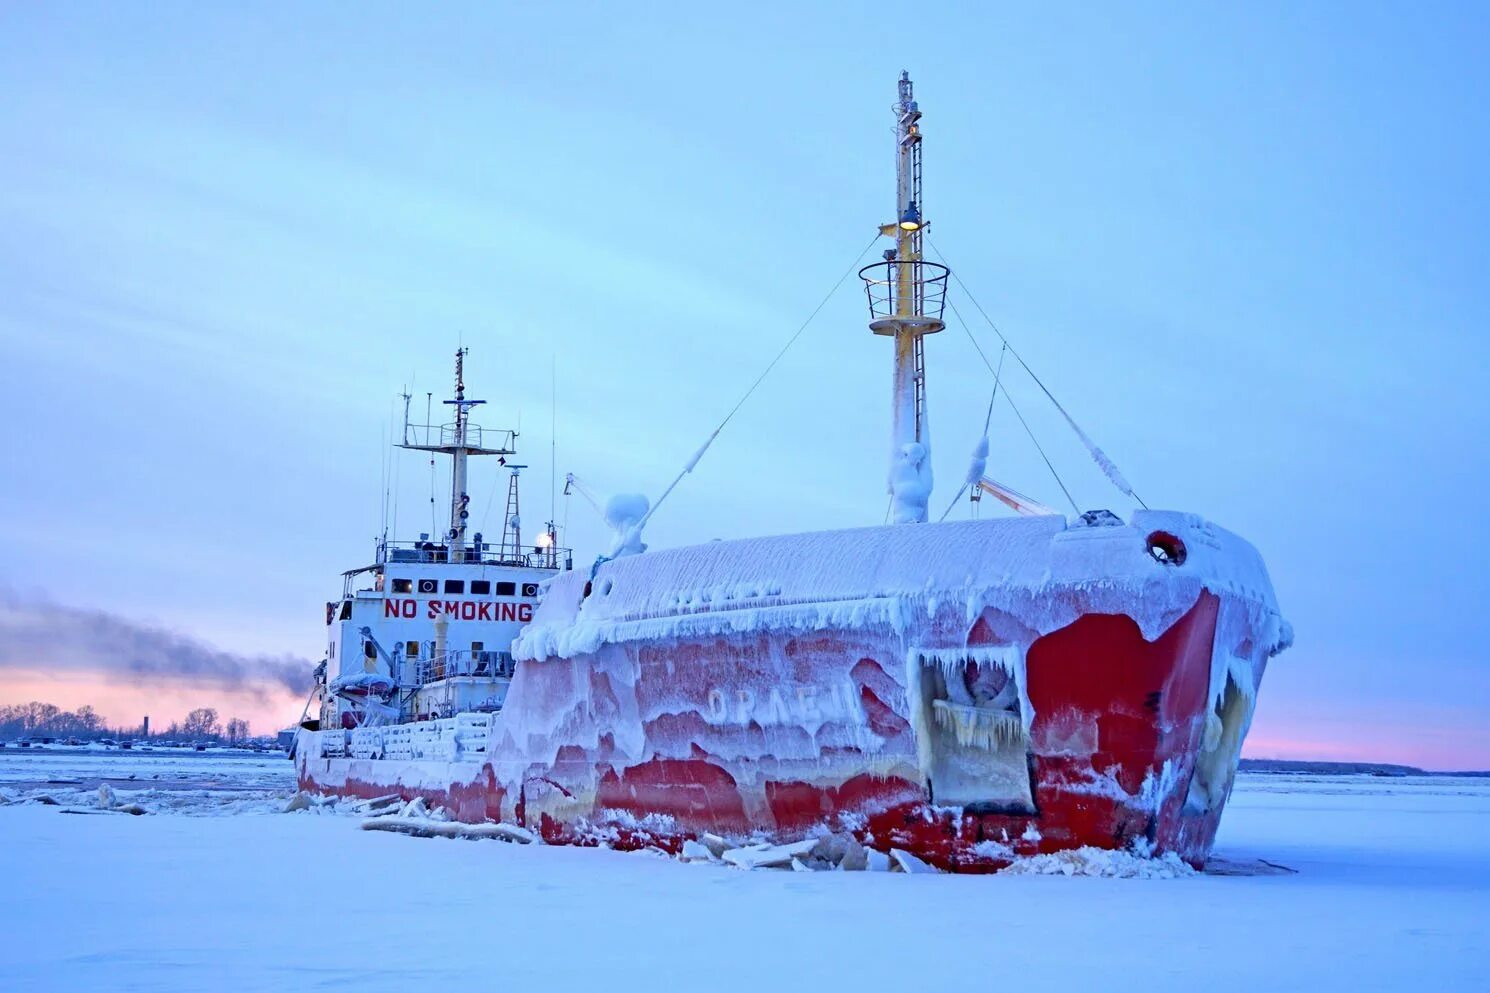 Корабль во льдах. Замерзший корабль. Судно застрявшее во льдах. Арктика корабль. Ледовые суда